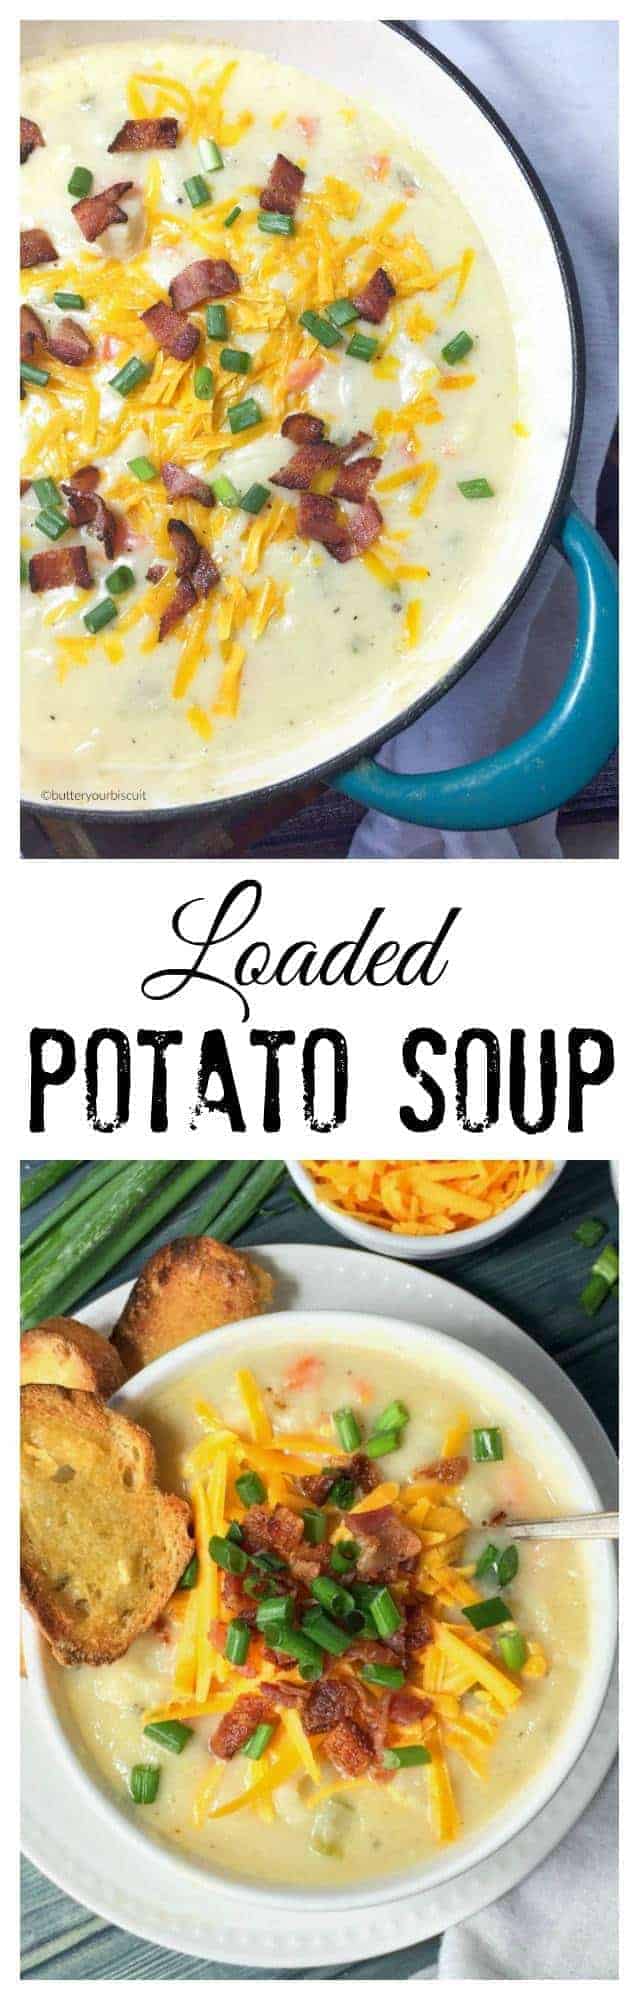 loaded-potato-soup-lp-2